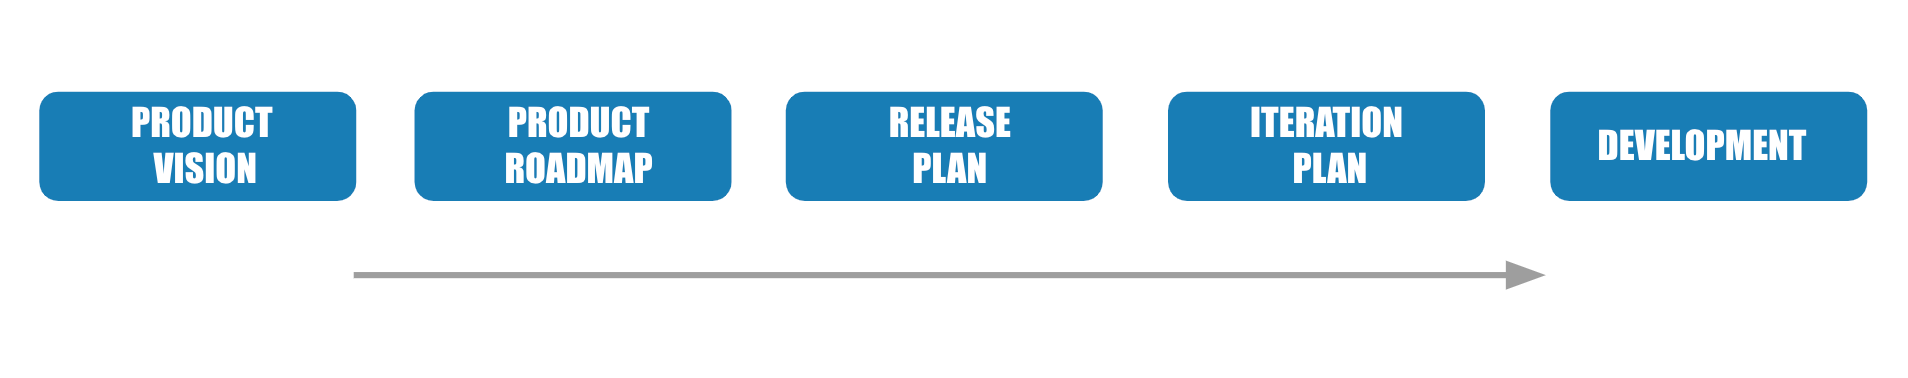 agile release planning process